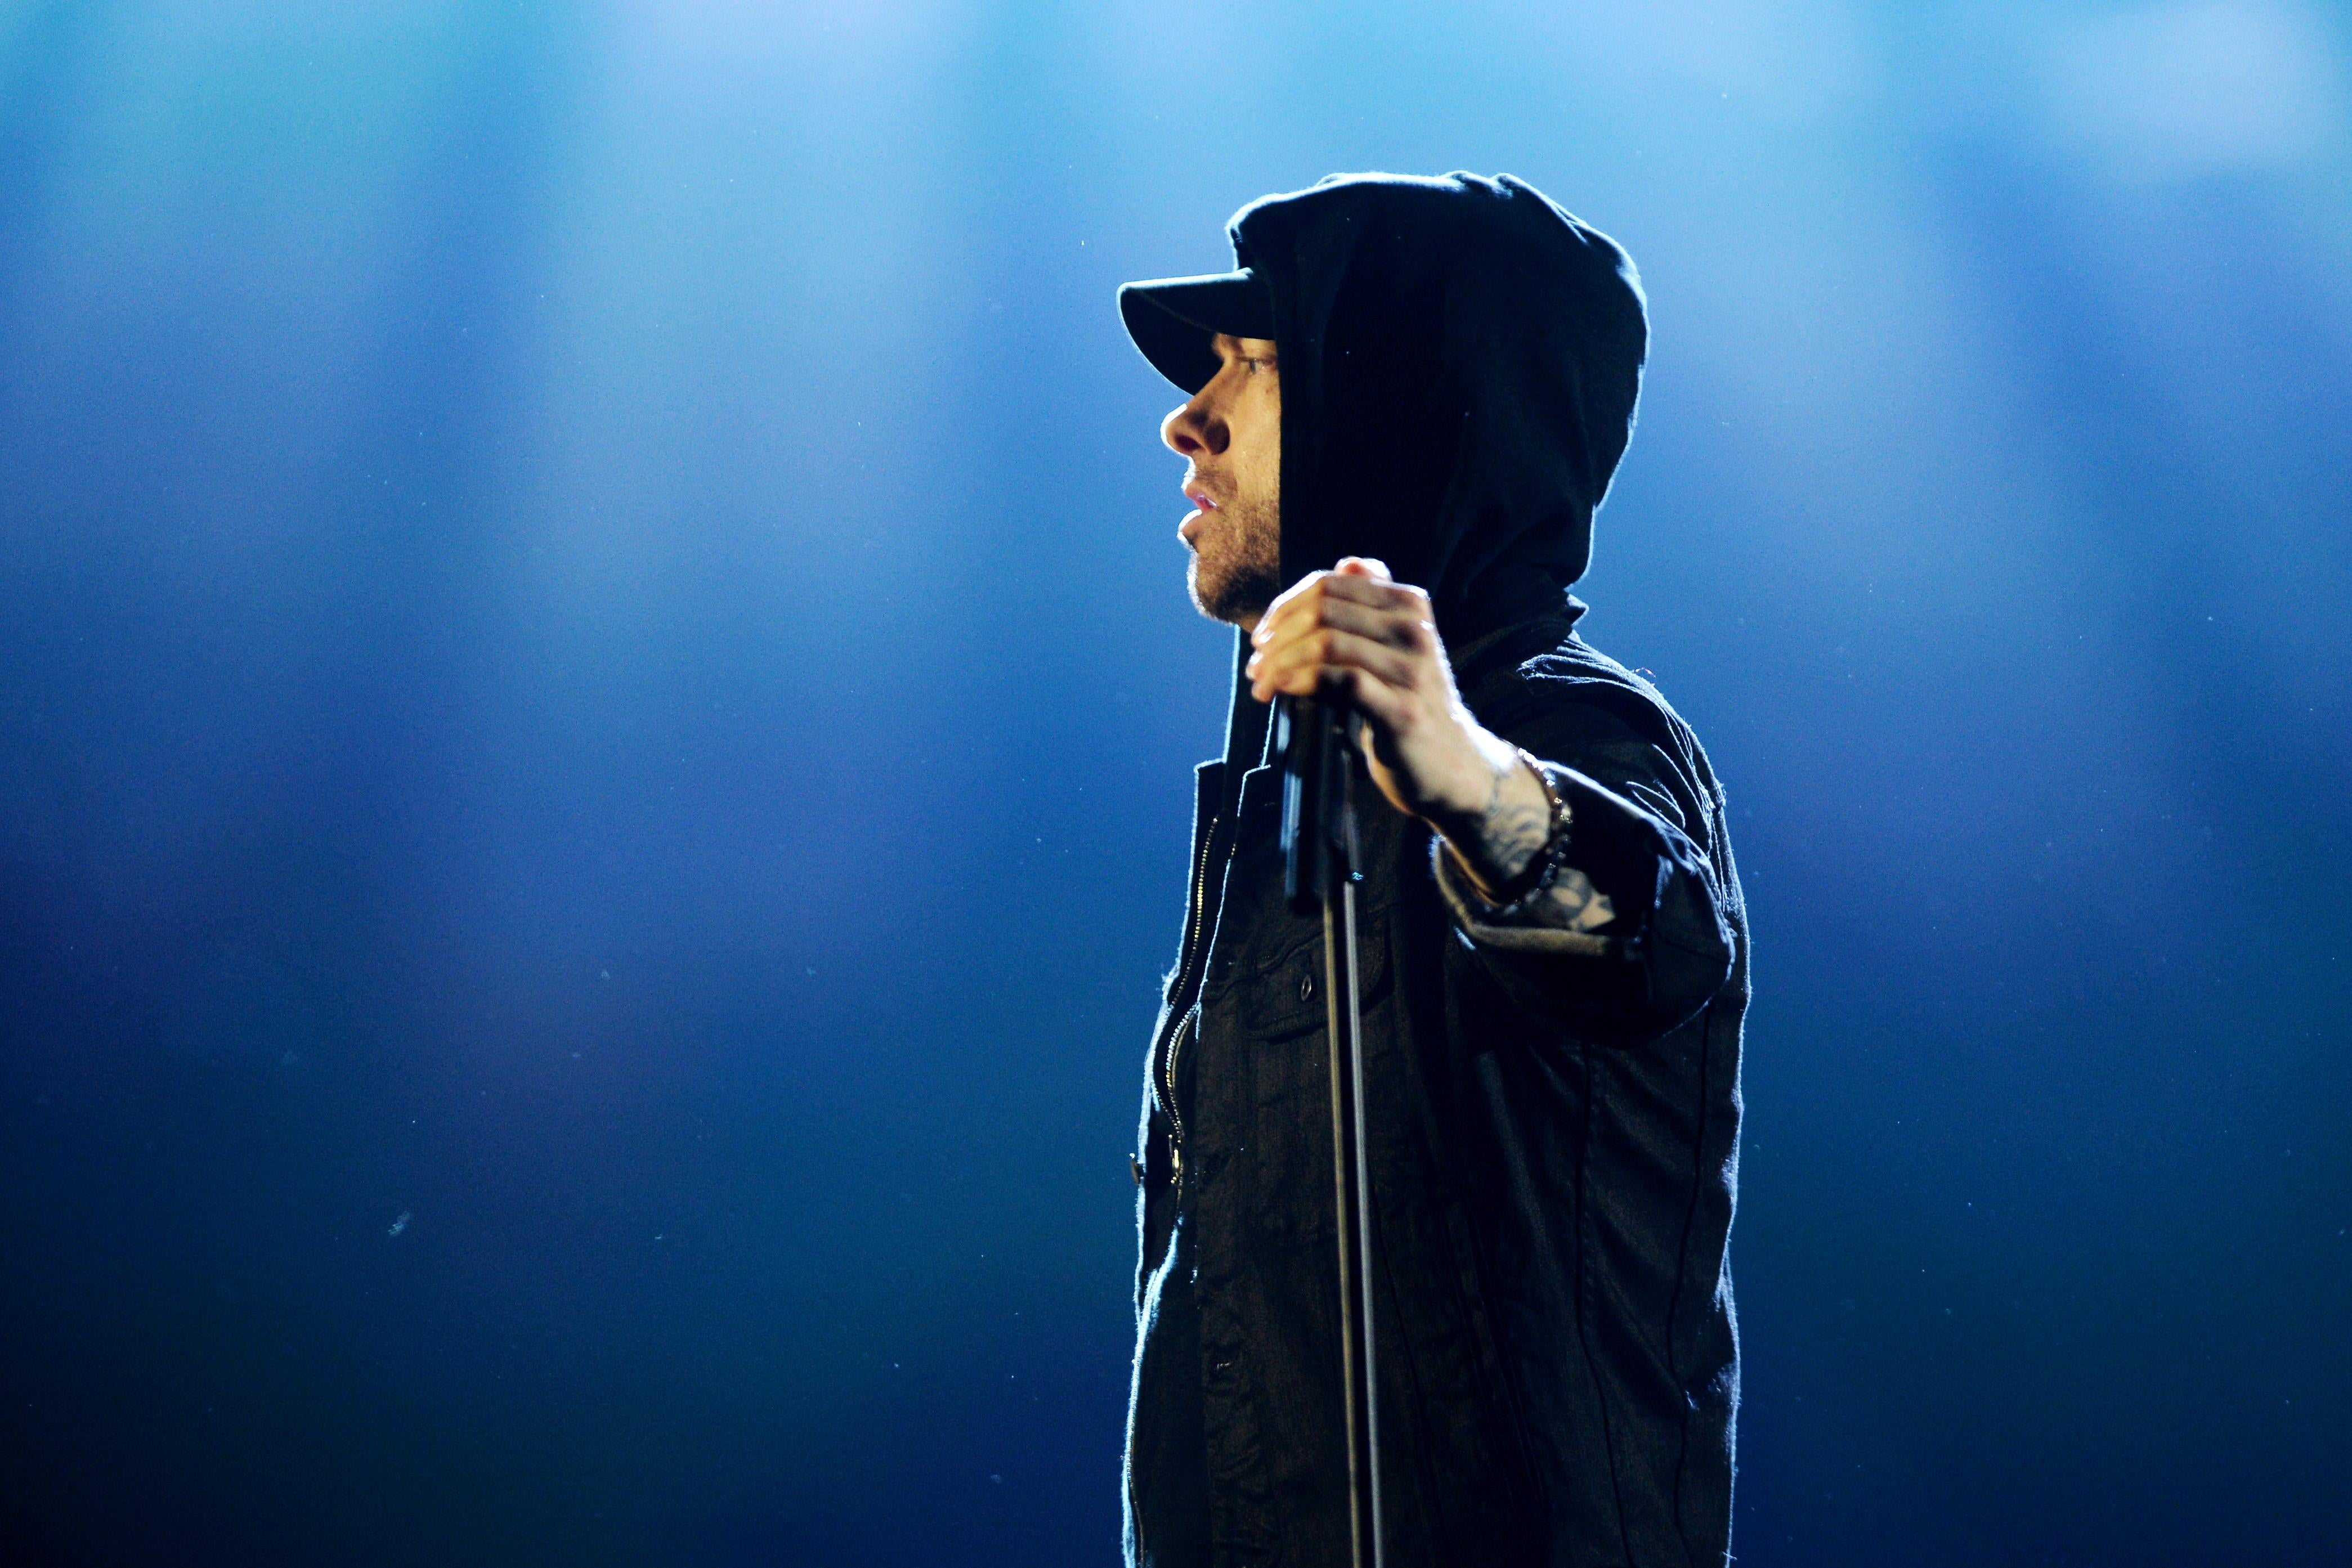 Eminem performs on stage.